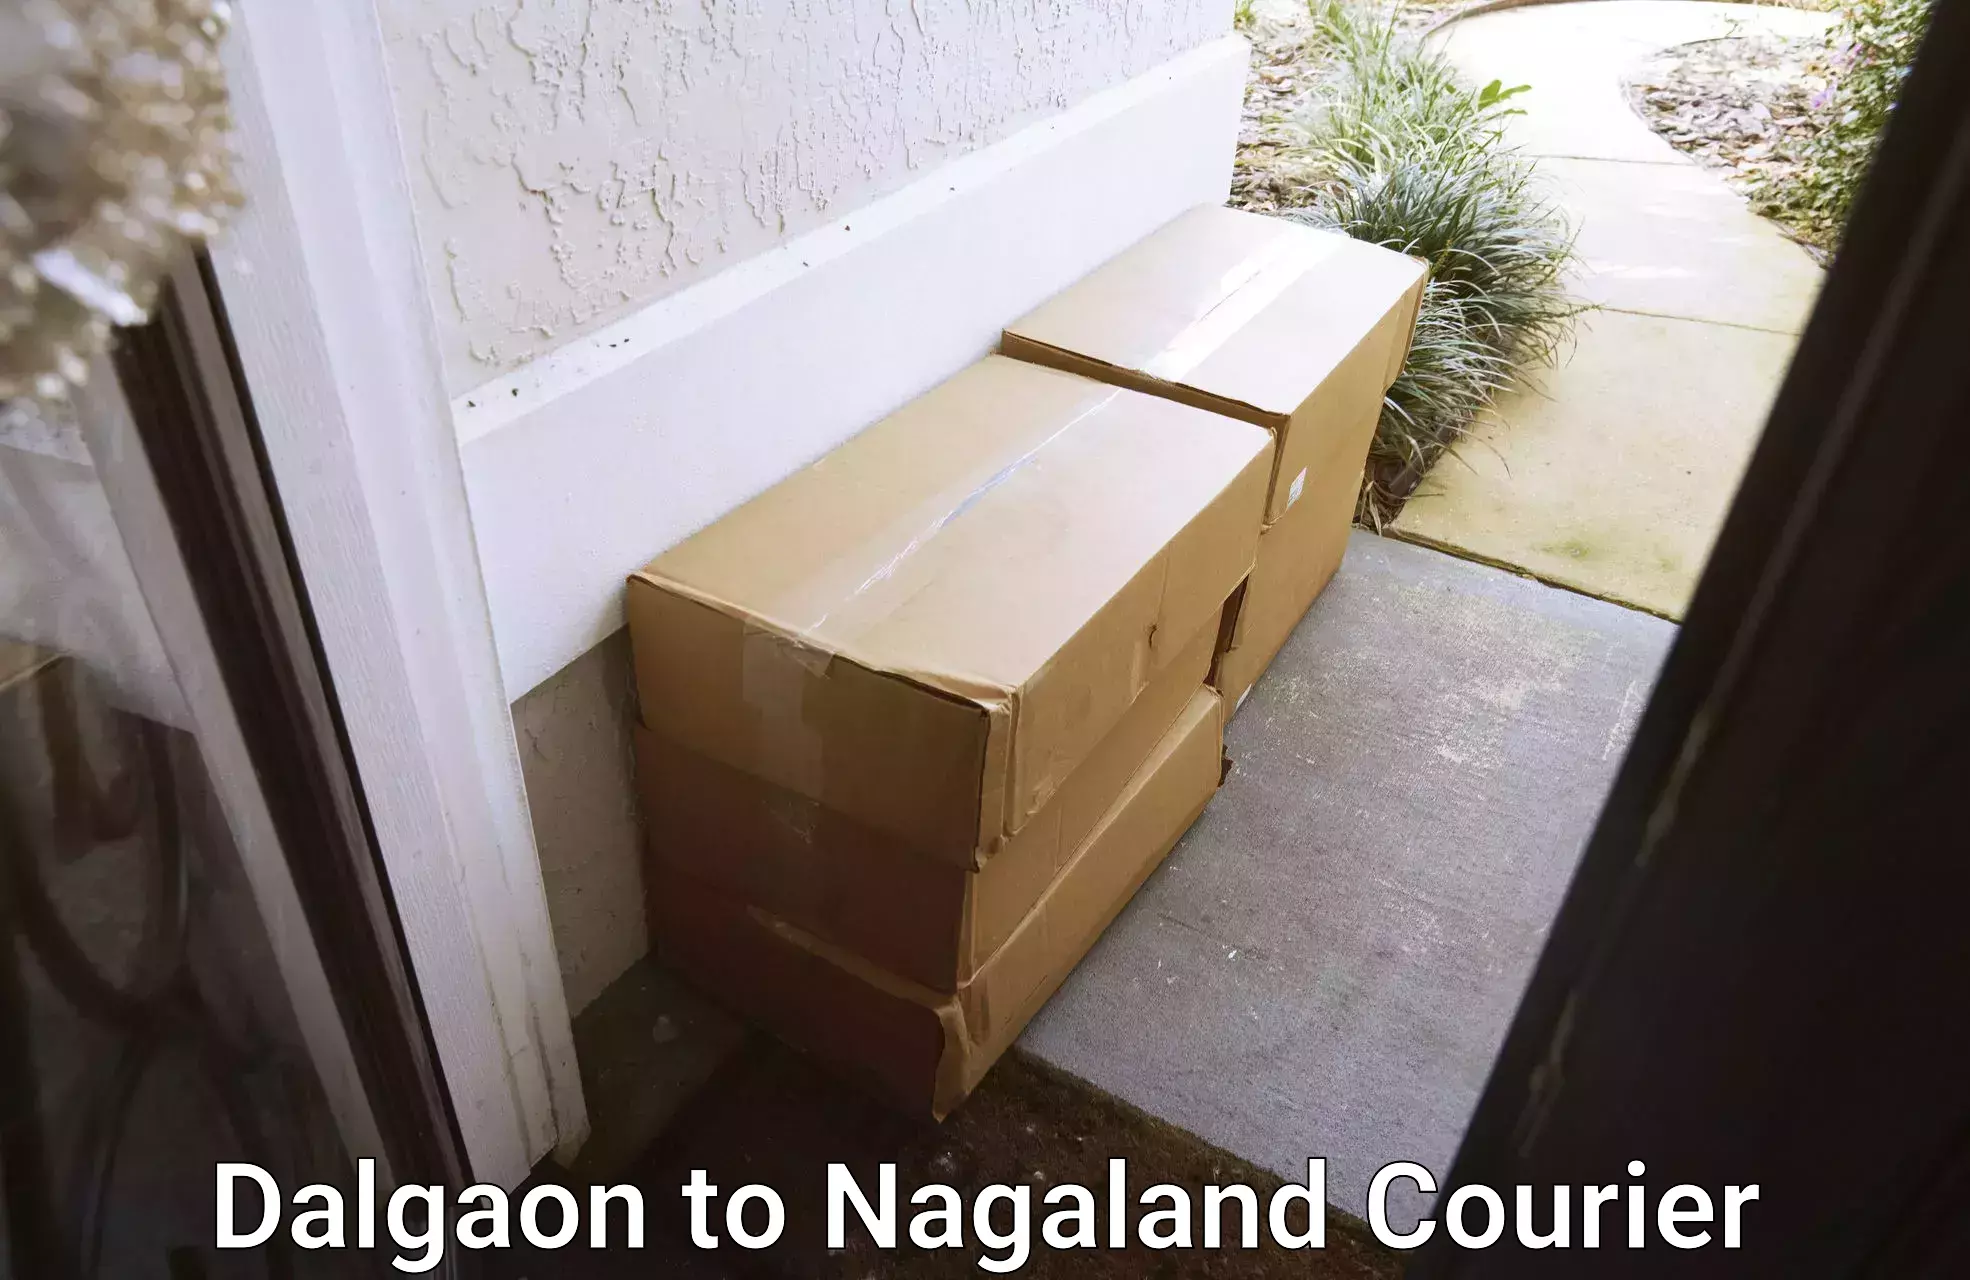 High-speed parcel service Dalgaon to Nagaland